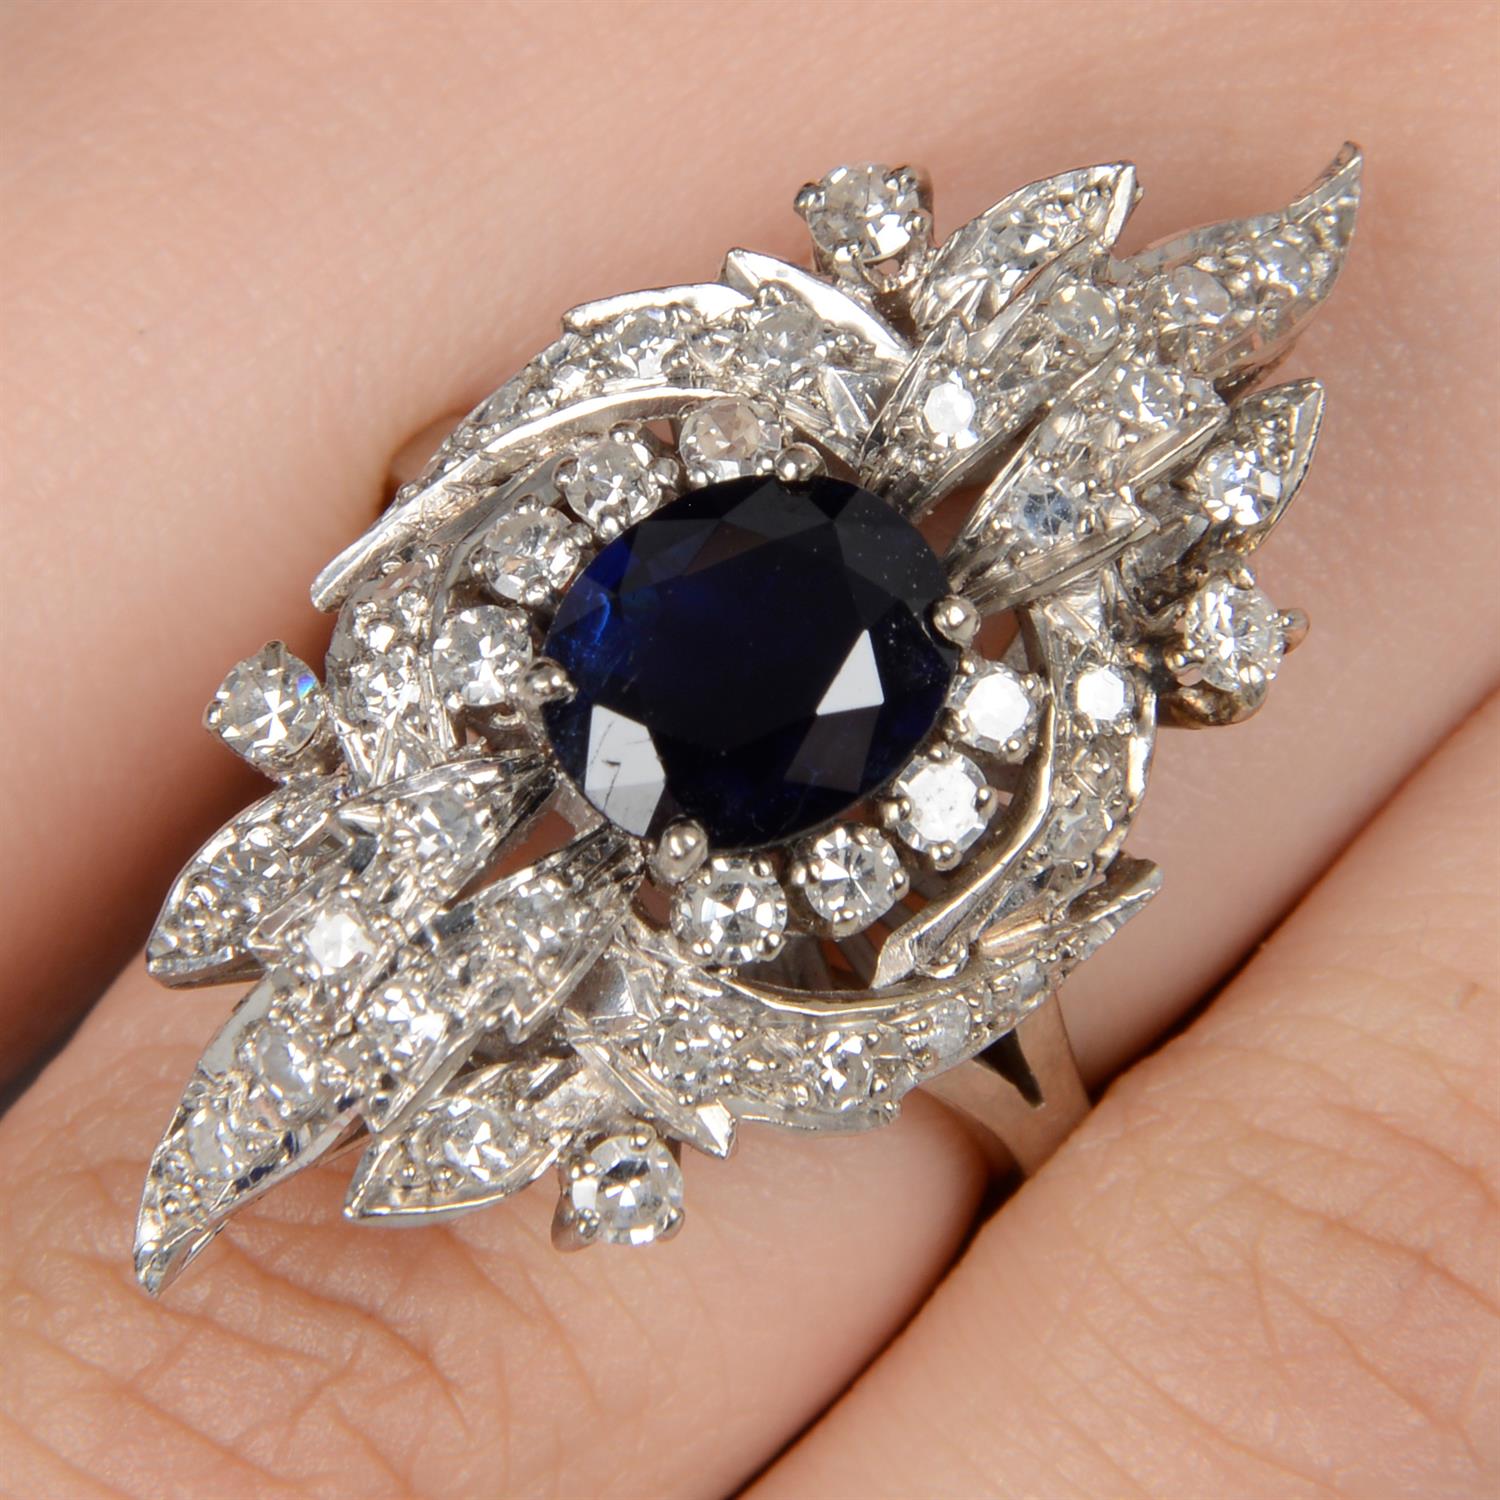 Mid 20th century sapphire and diamond ring